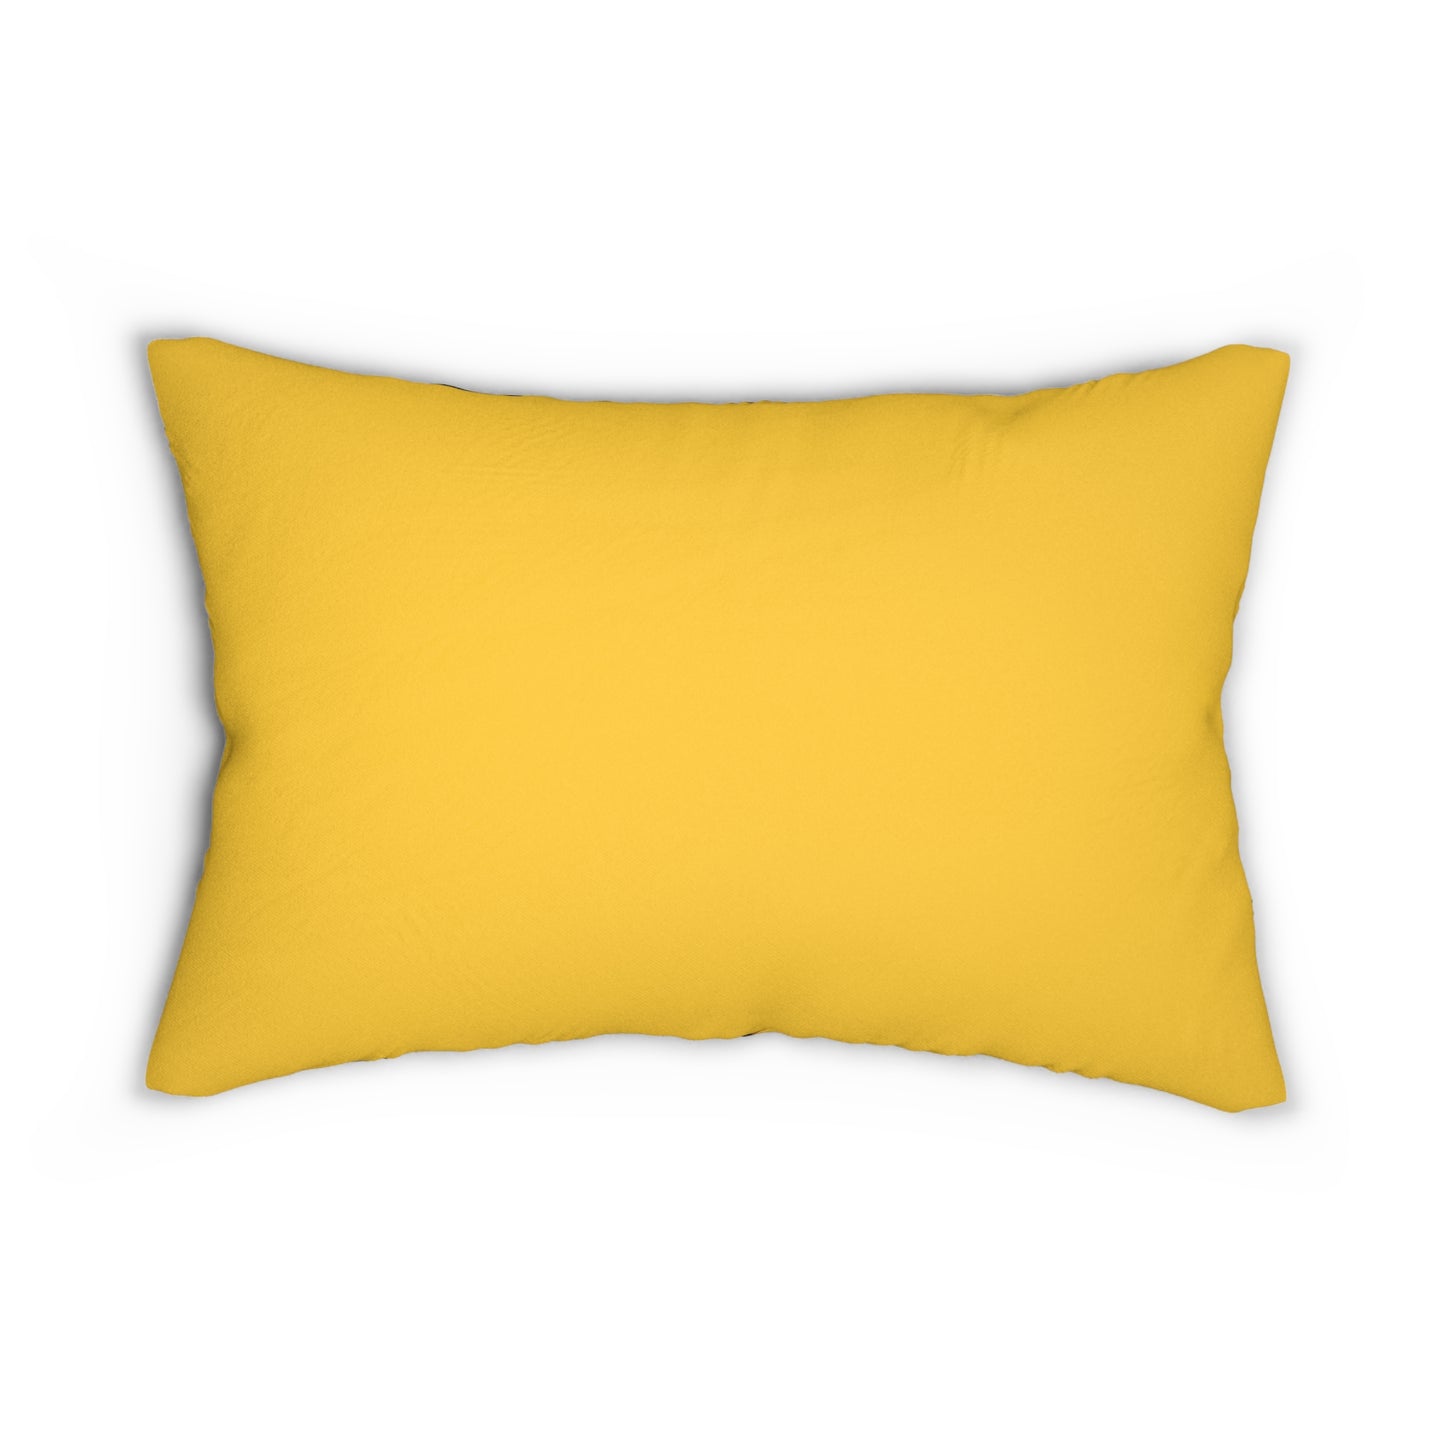 Almohada decorativa dorada con estampado animal (doble)